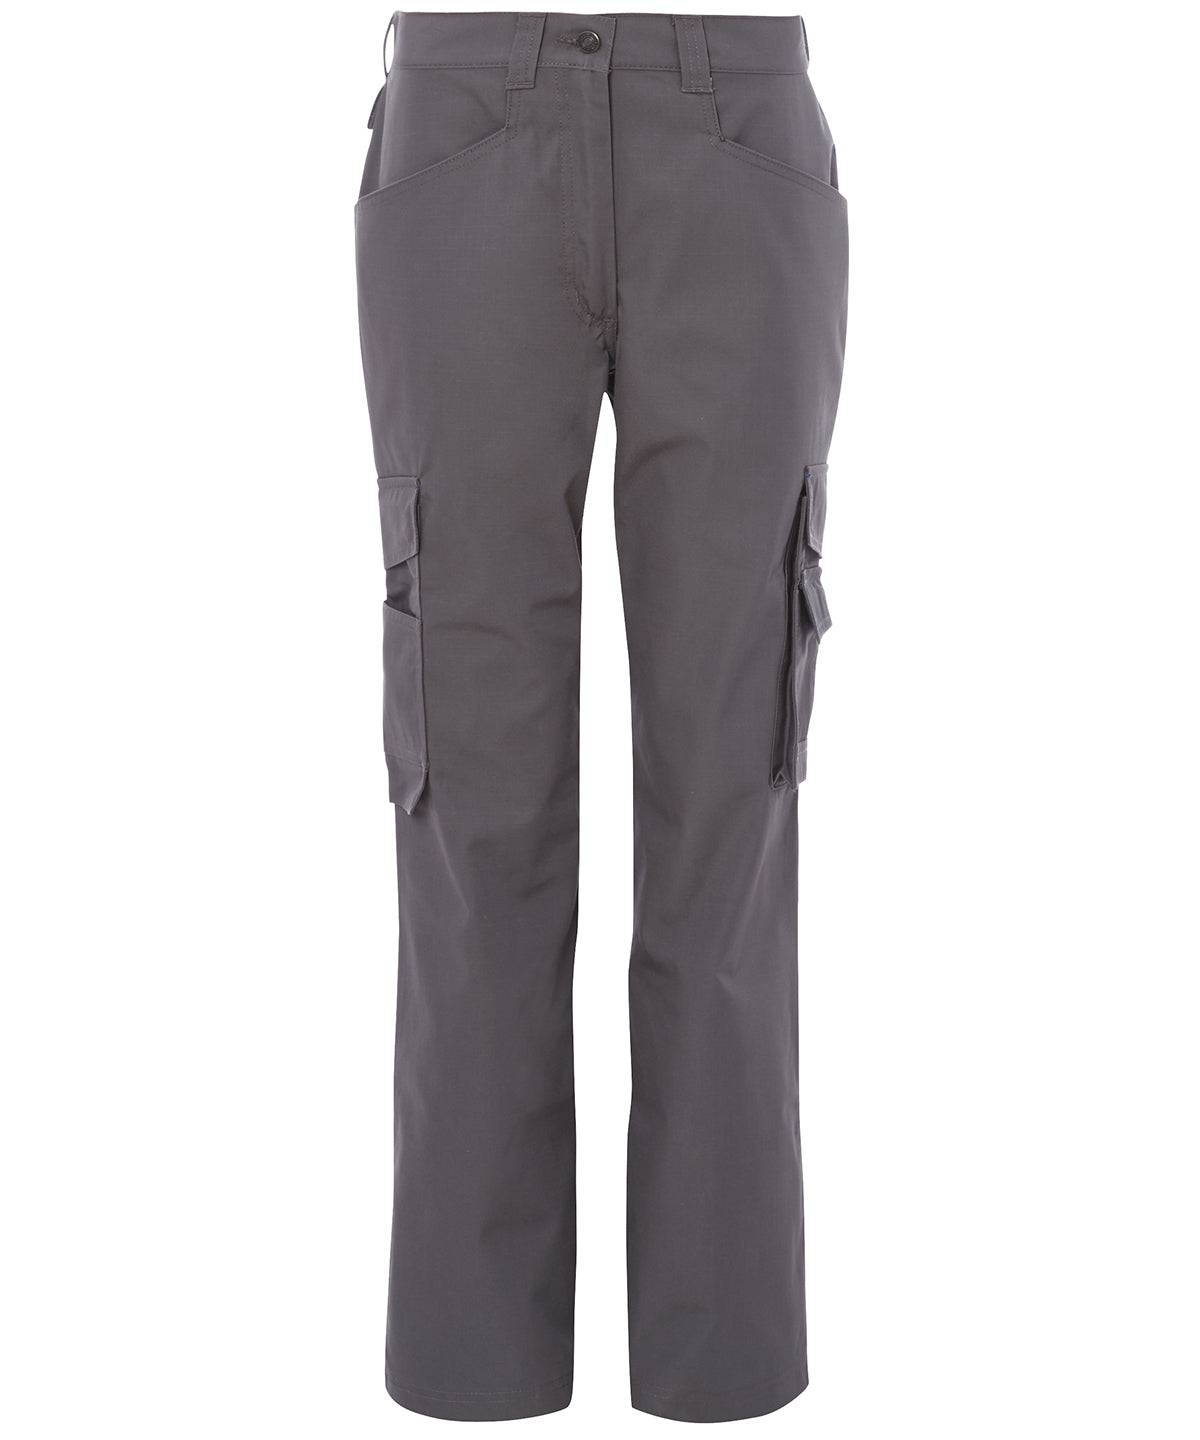 Grey - Women's tungsten service trousers